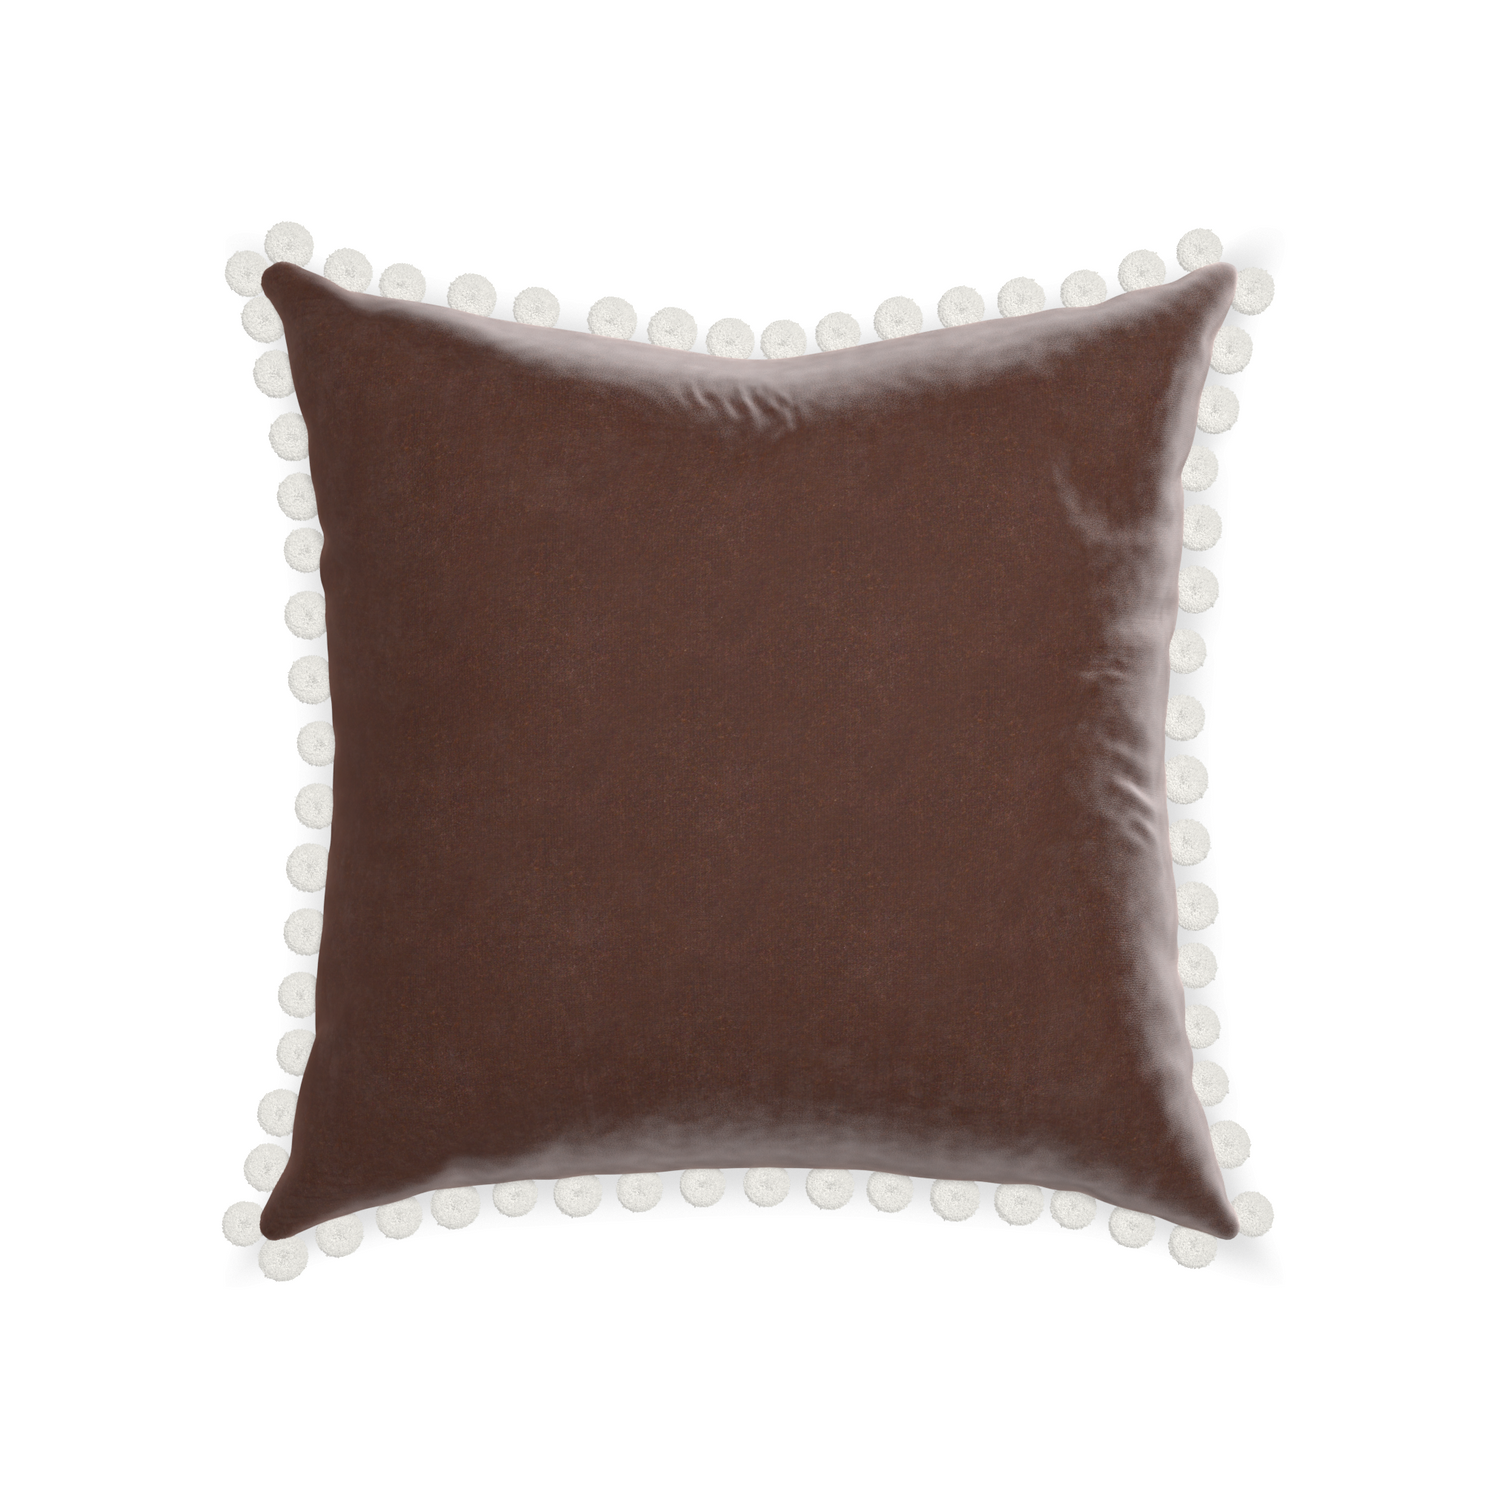 22-square walnut velvet custom pillow with snow pom pom on white background